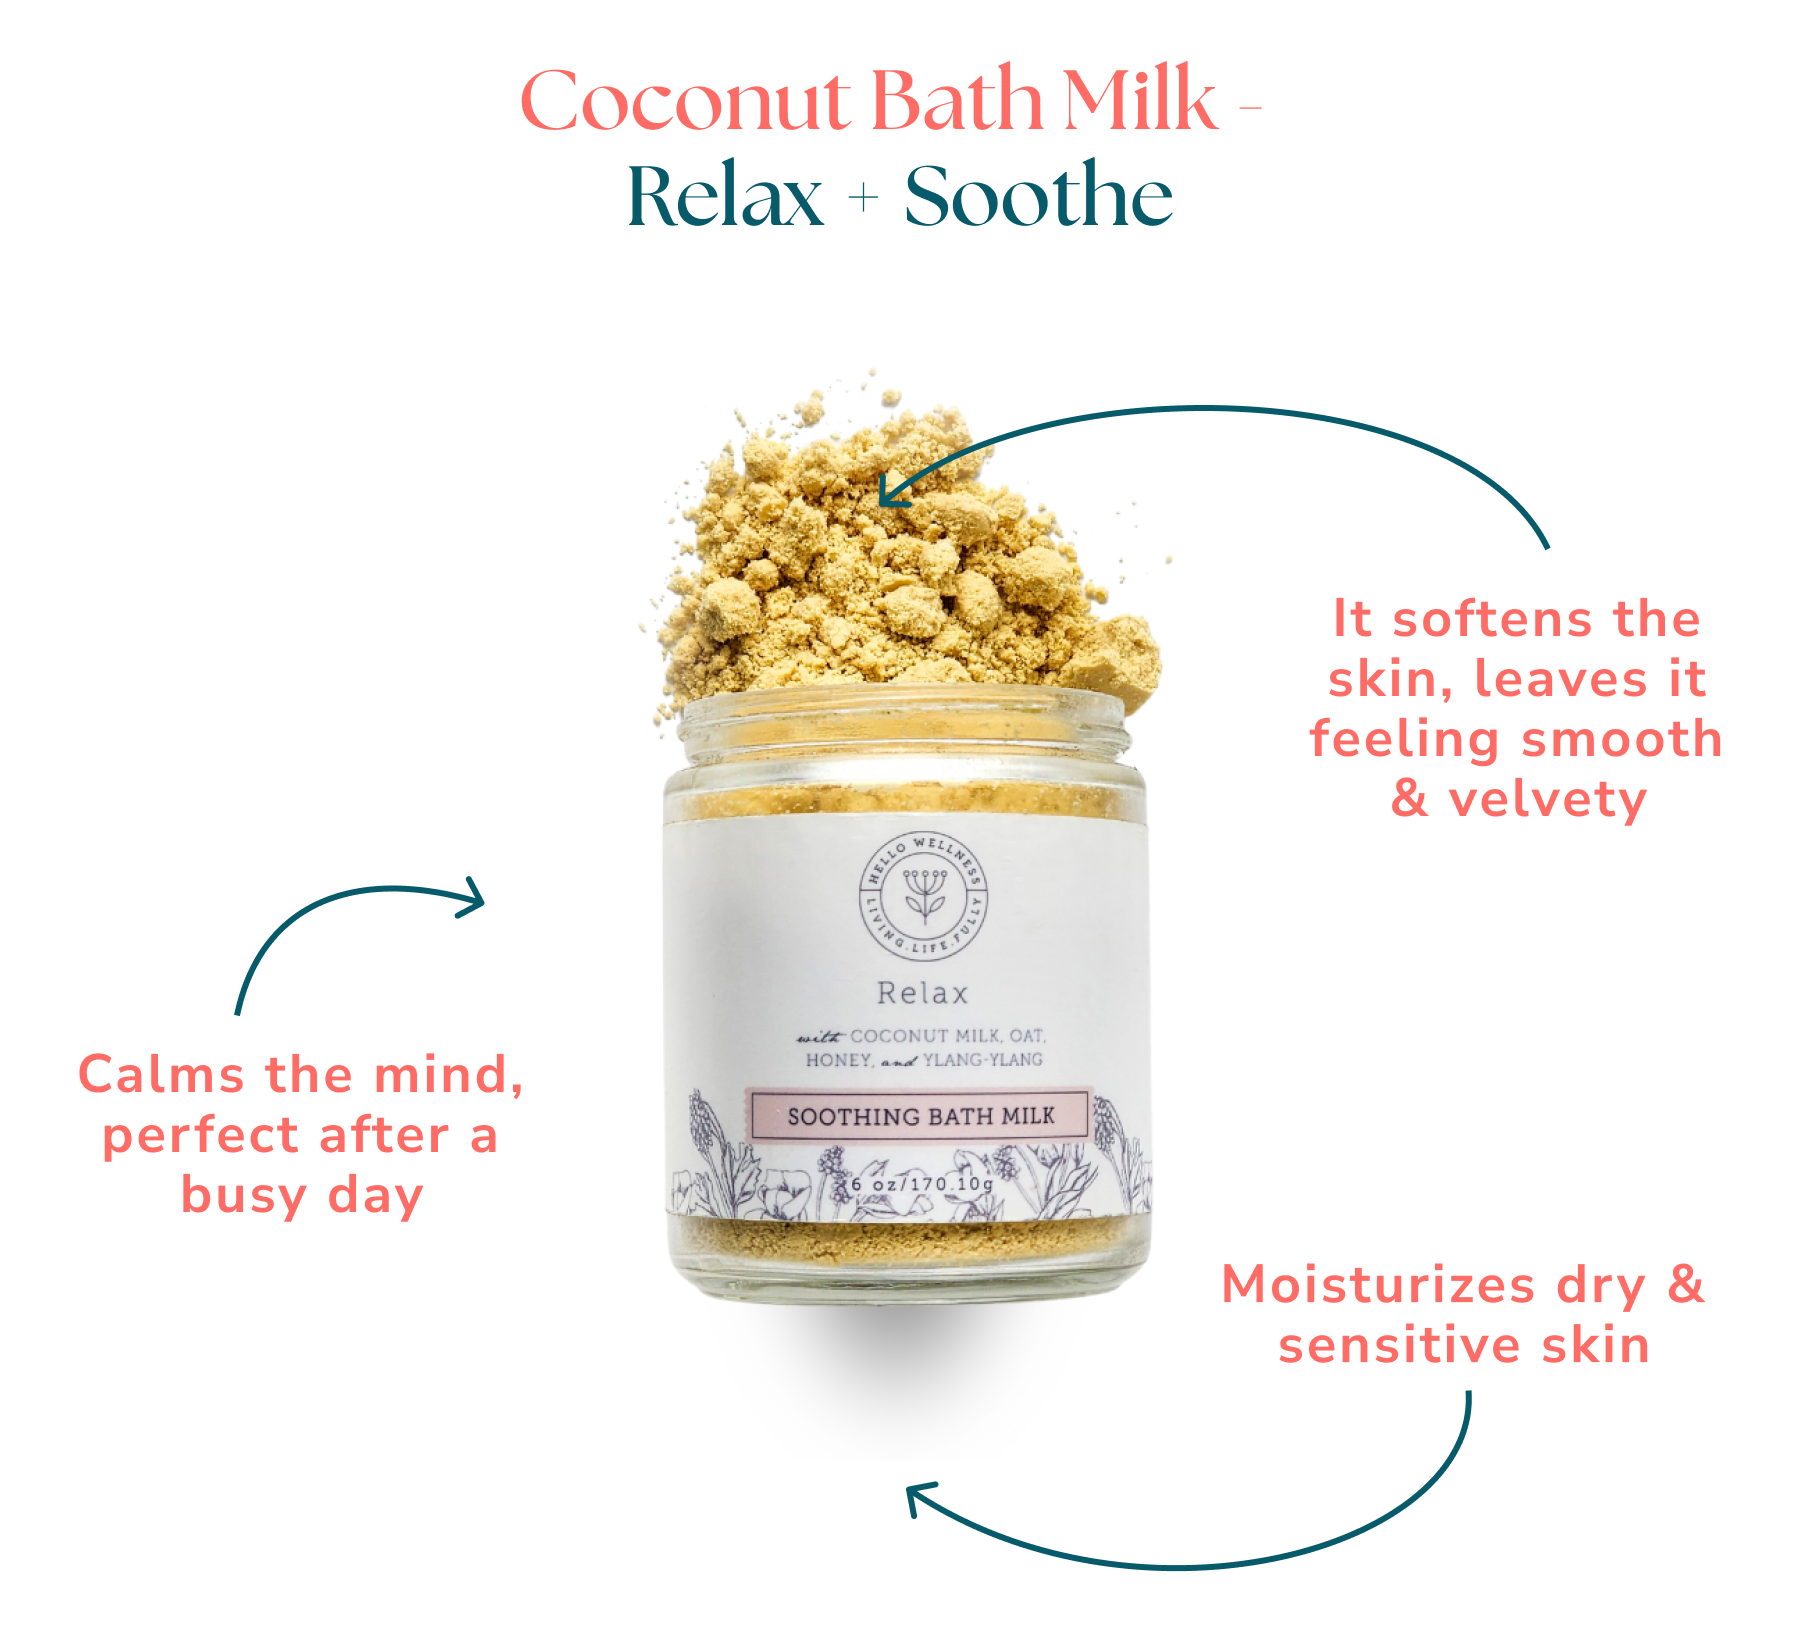 Coconut Bath Milk - Relax + Soothe